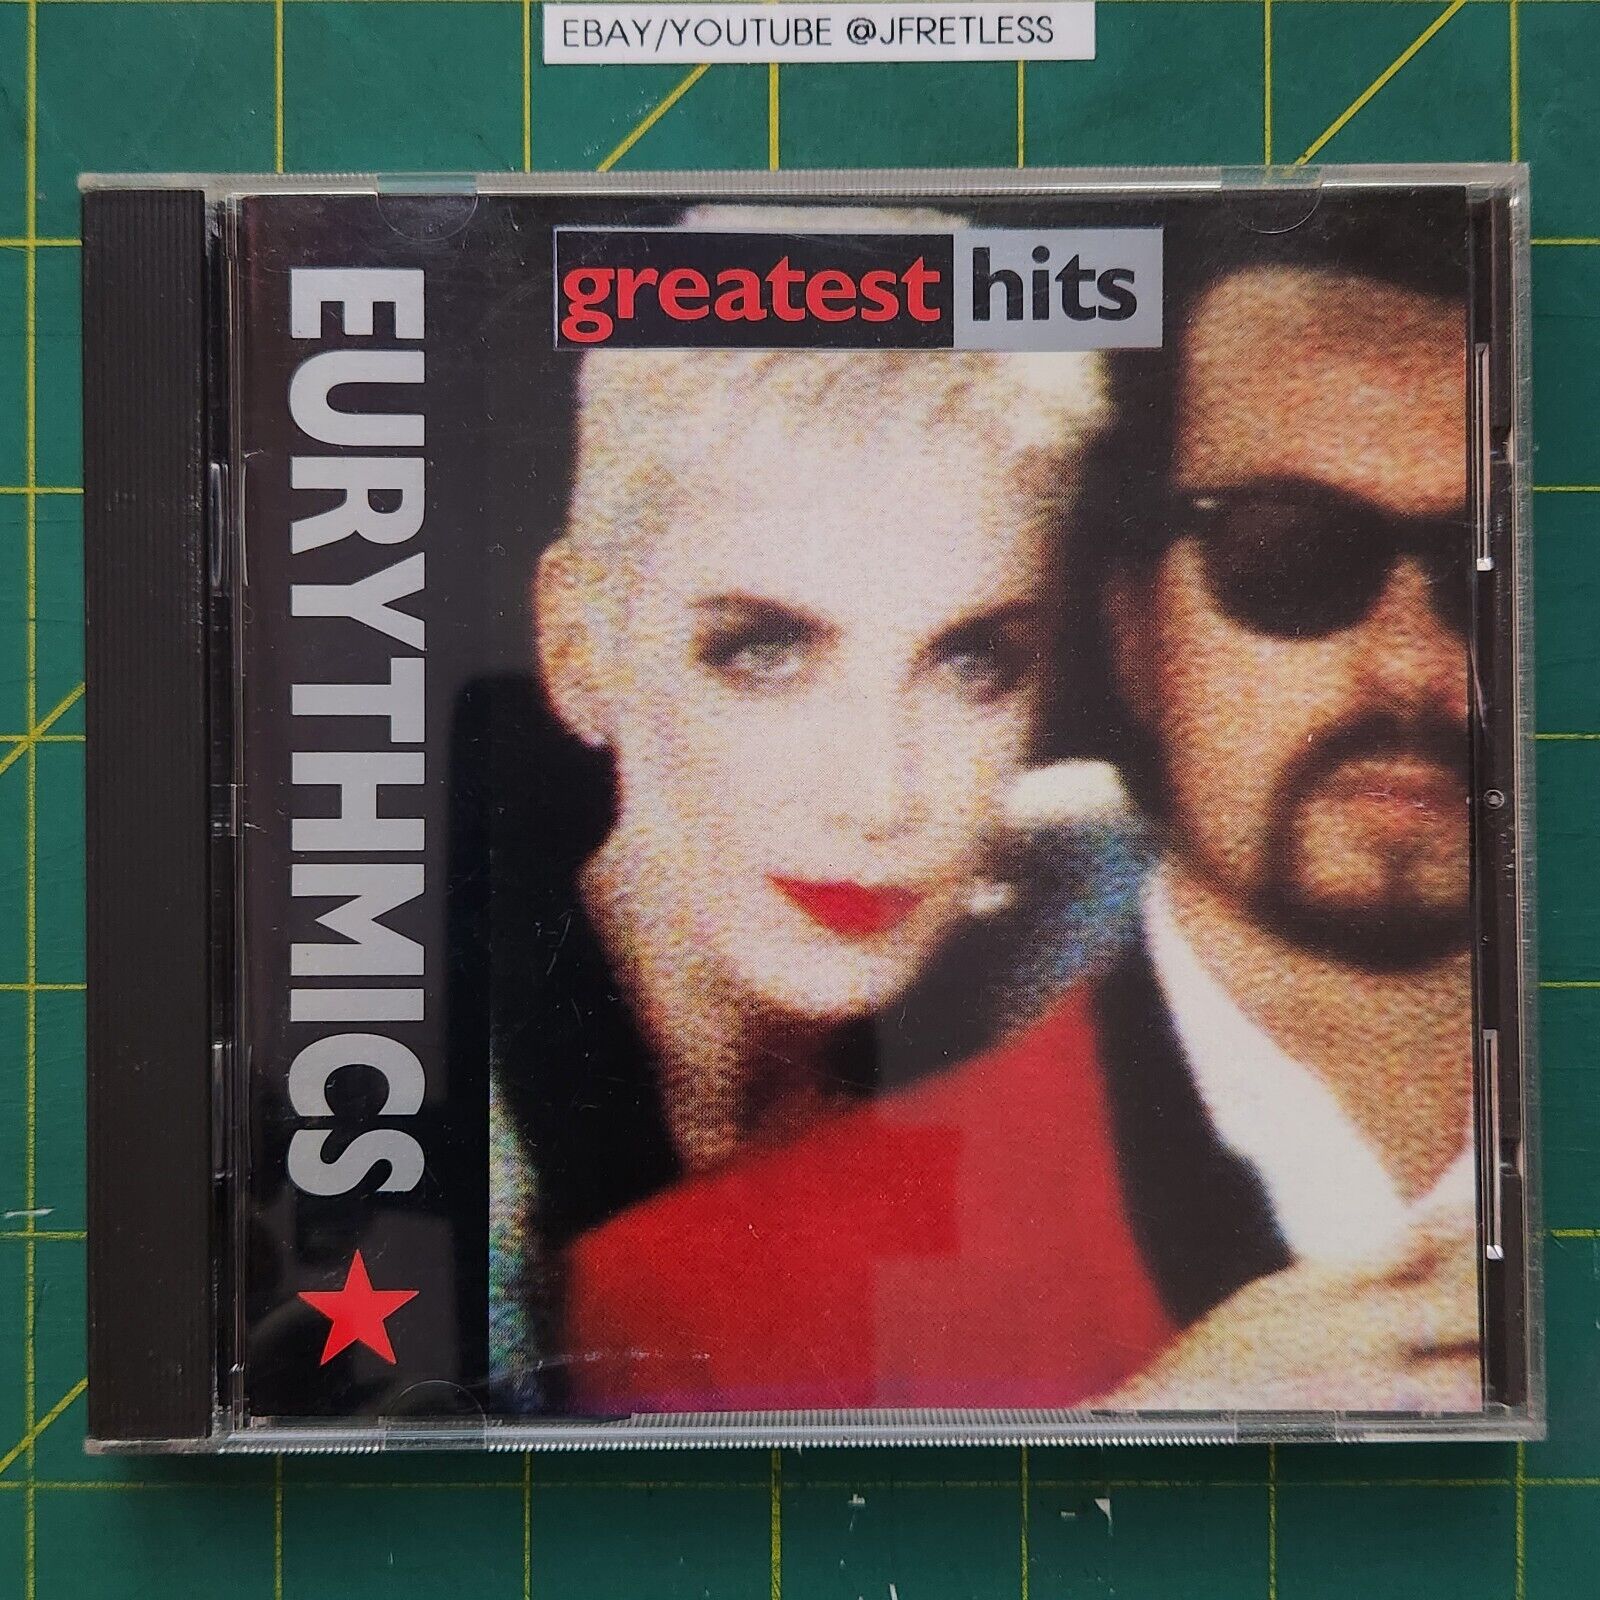 Used Audio Music CD Eurythmics Greatest Hits Album Arista Records 1991 BMG 